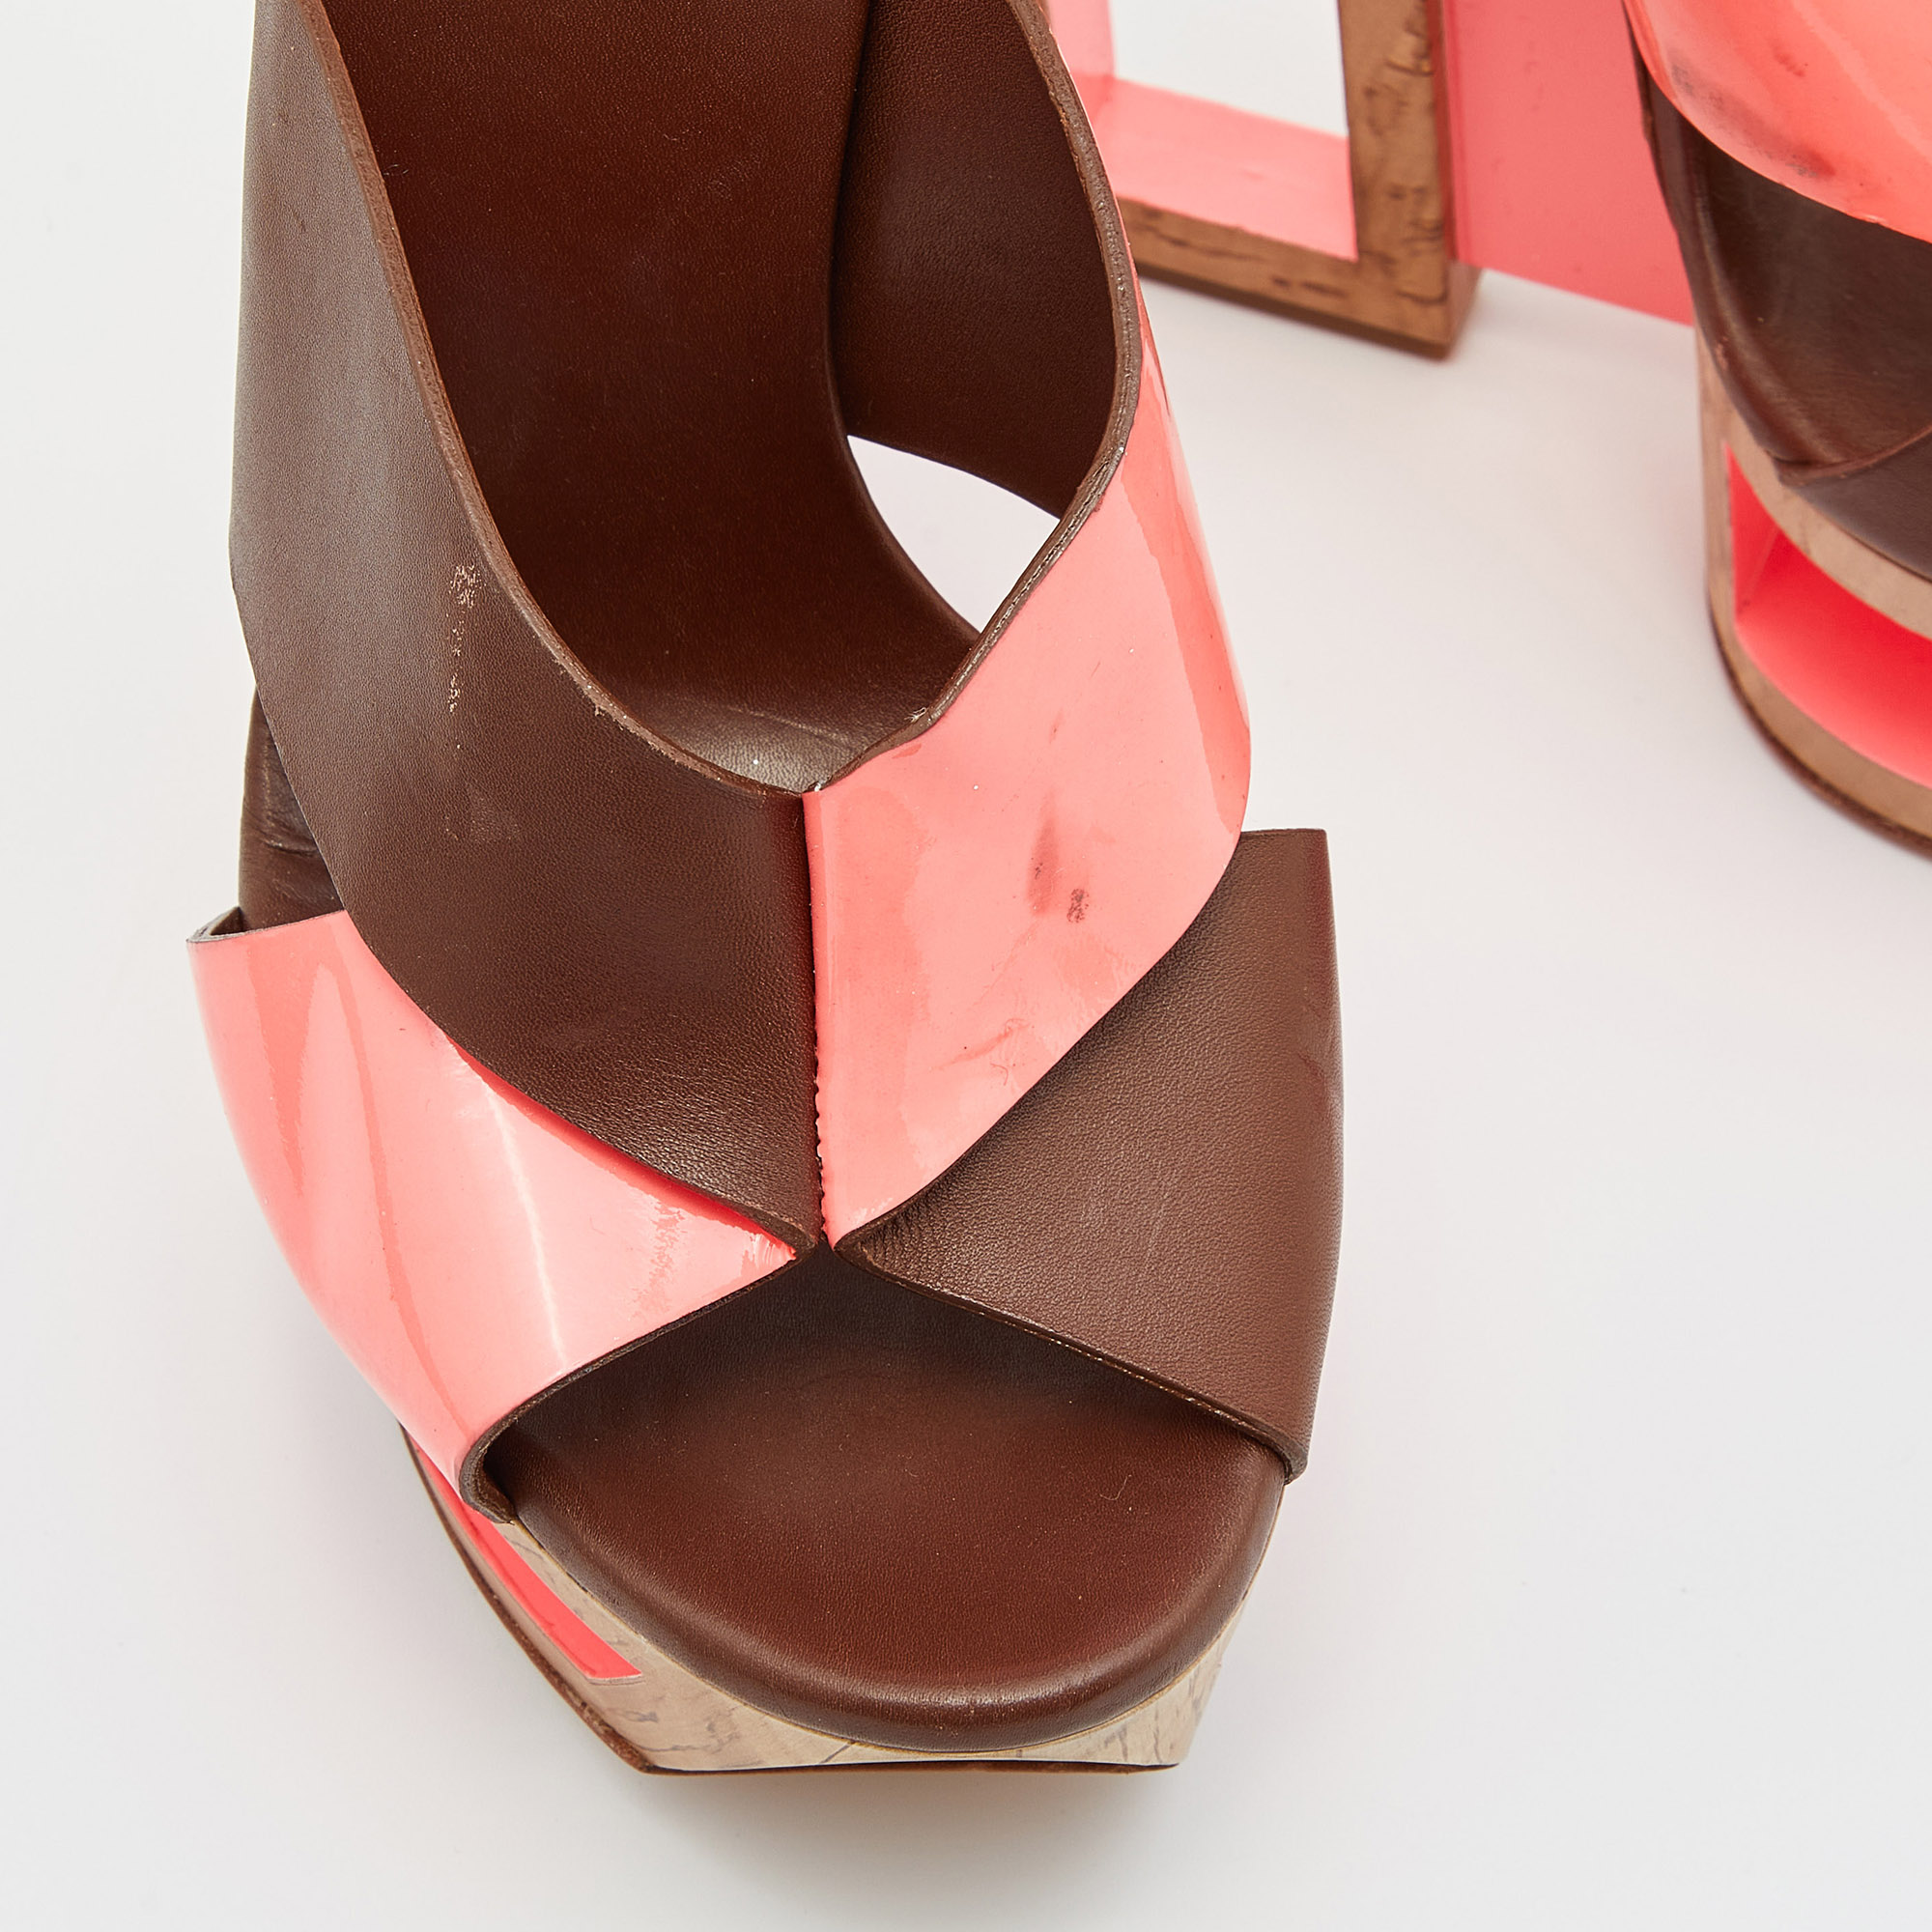 Casadei Brown/Orange Leather And Patent Wedge Platform Slide Sandals Size 36